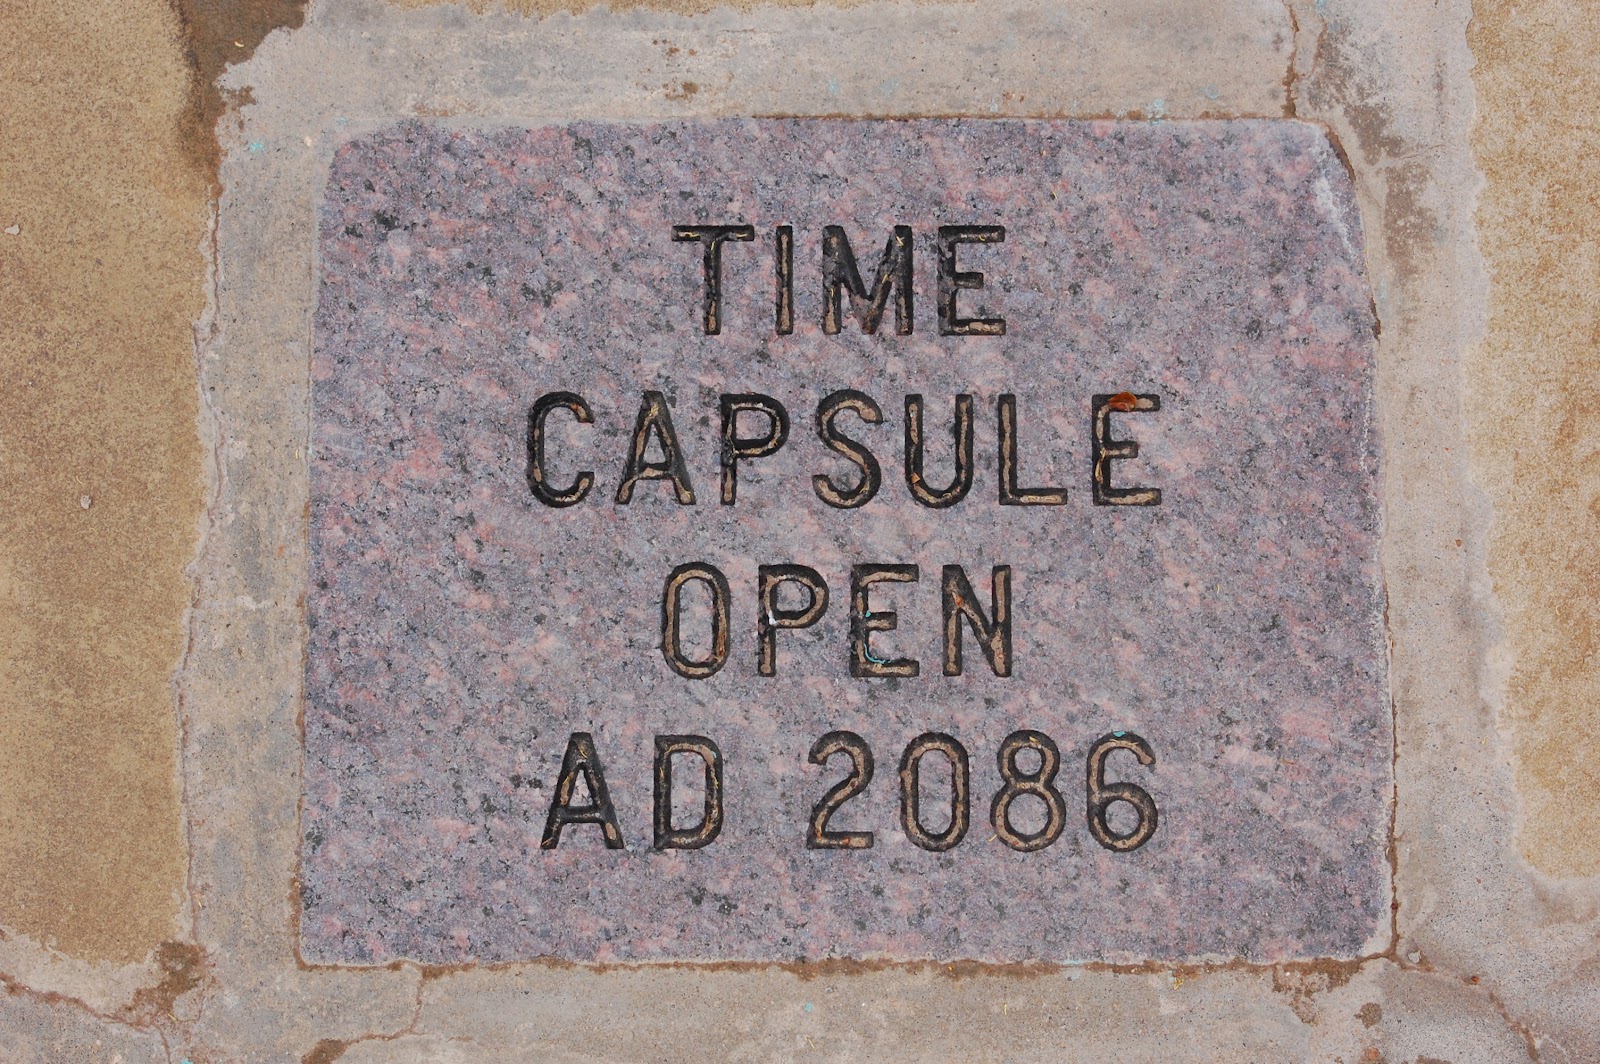 File:Time capsule plaque (Open AD 2086) - Little Rock, Arkansas - USA - 1  April 2008.jpg - Wikimedia Commons